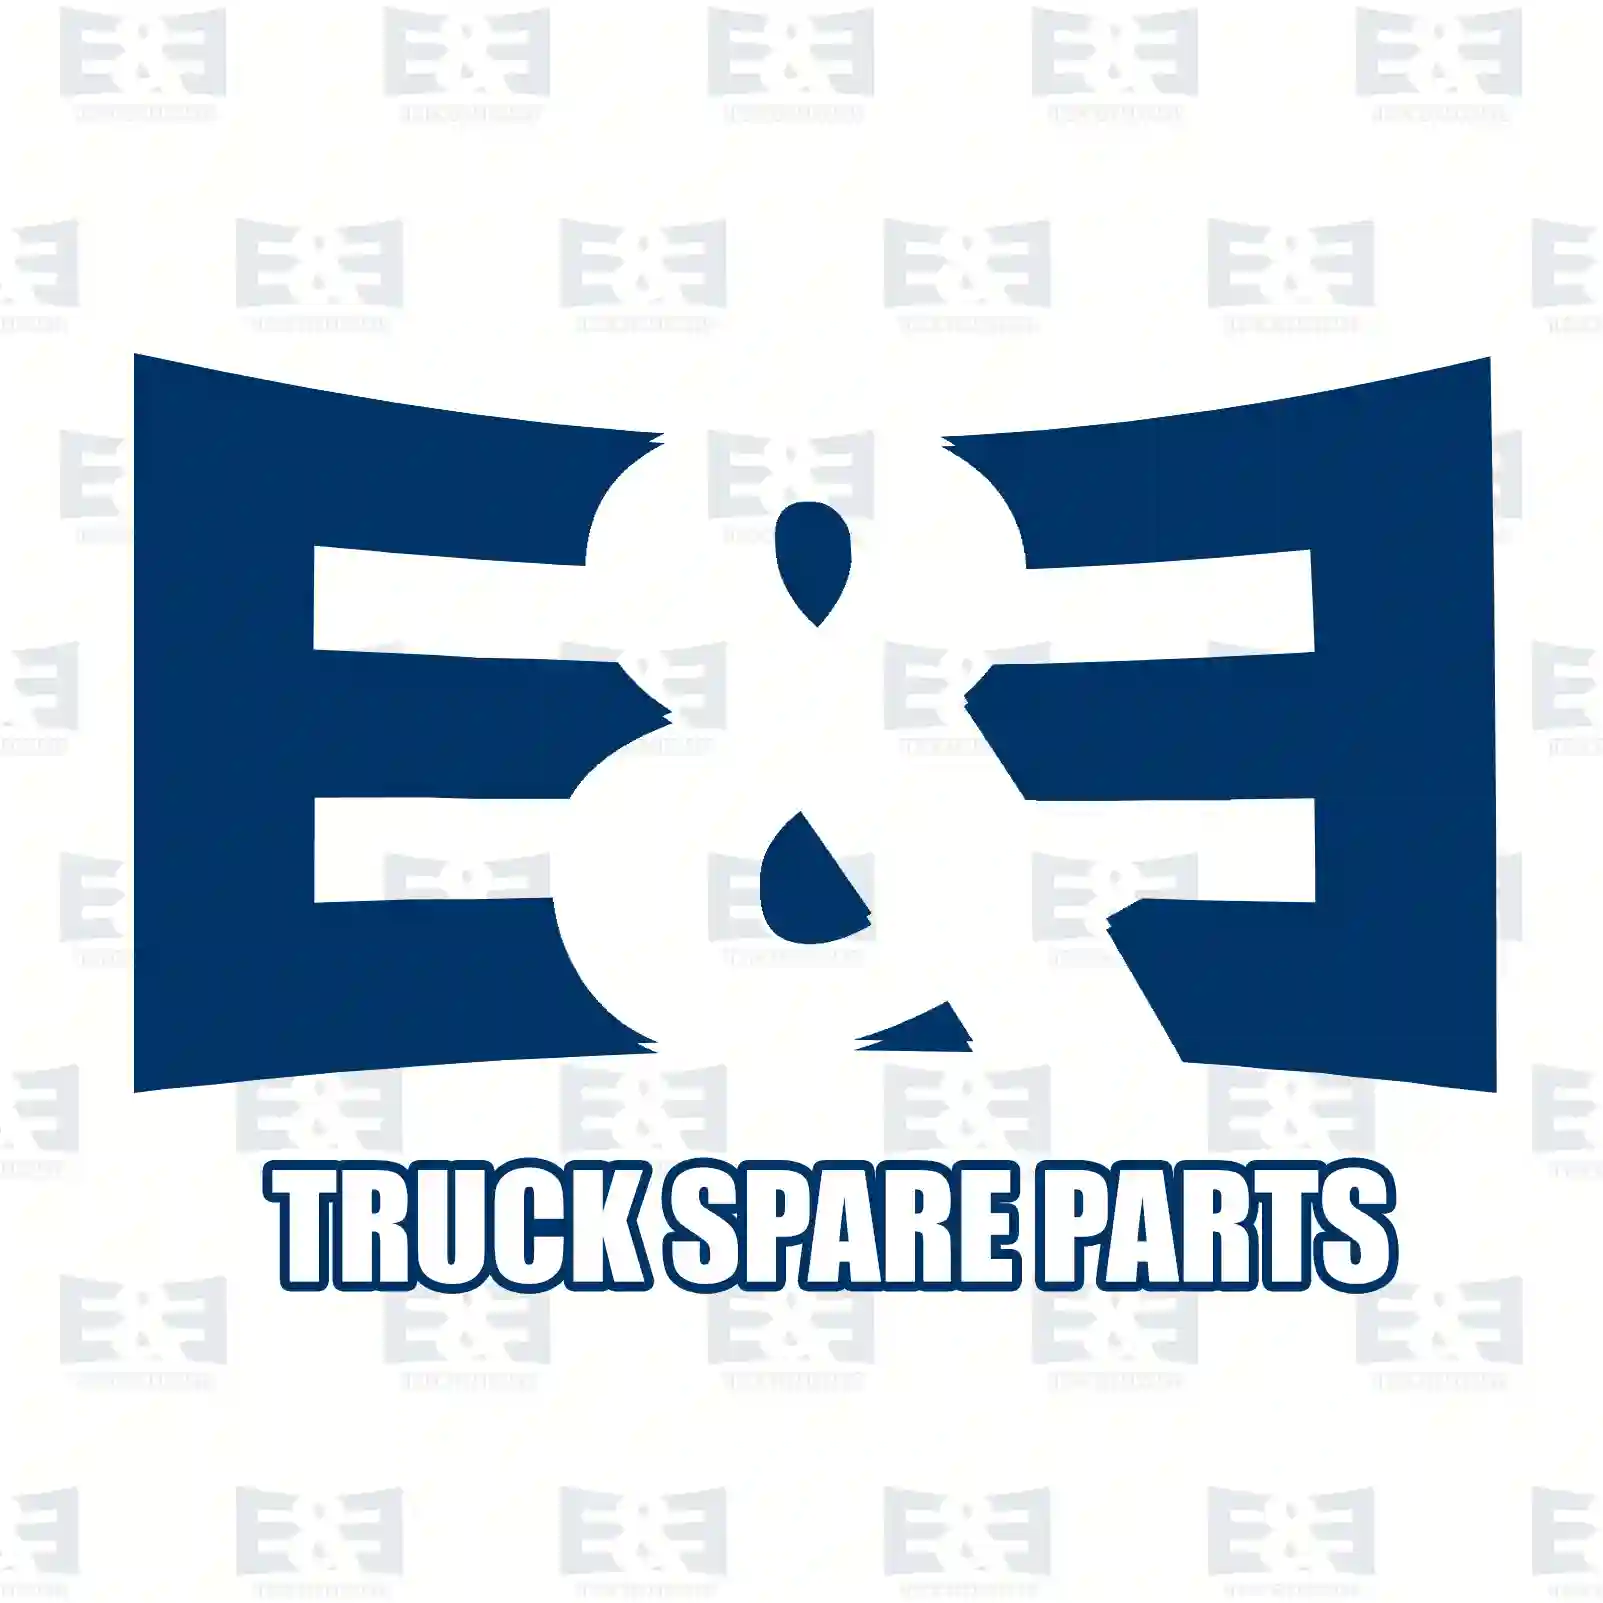 Ball joint, right hand thread, 2E2277929, 81953016127, , ||  2E2277929 E&E Truck Spare Parts | Truck Spare Parts, Auotomotive Spare Parts Ball joint, right hand thread, 2E2277929, 81953016127, , ||  2E2277929 E&E Truck Spare Parts | Truck Spare Parts, Auotomotive Spare Parts